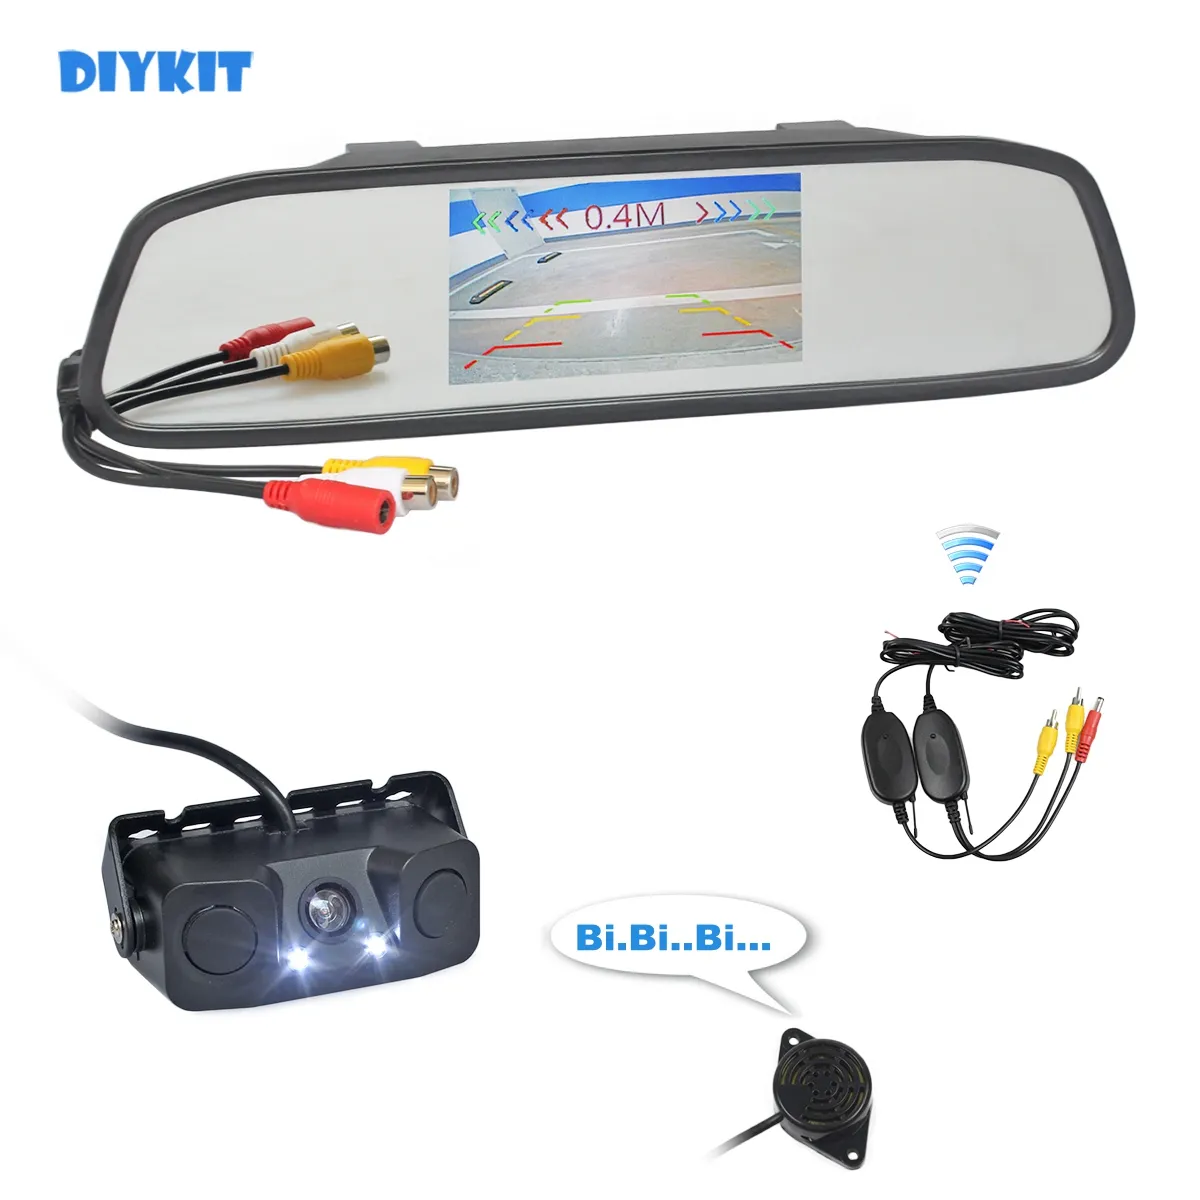 DIYKIT Wireless Auto Parking Monitor System Waterdichte Parking Radar Sensor Auto Camera + 4.3 Inch Auto Mirror Monitor